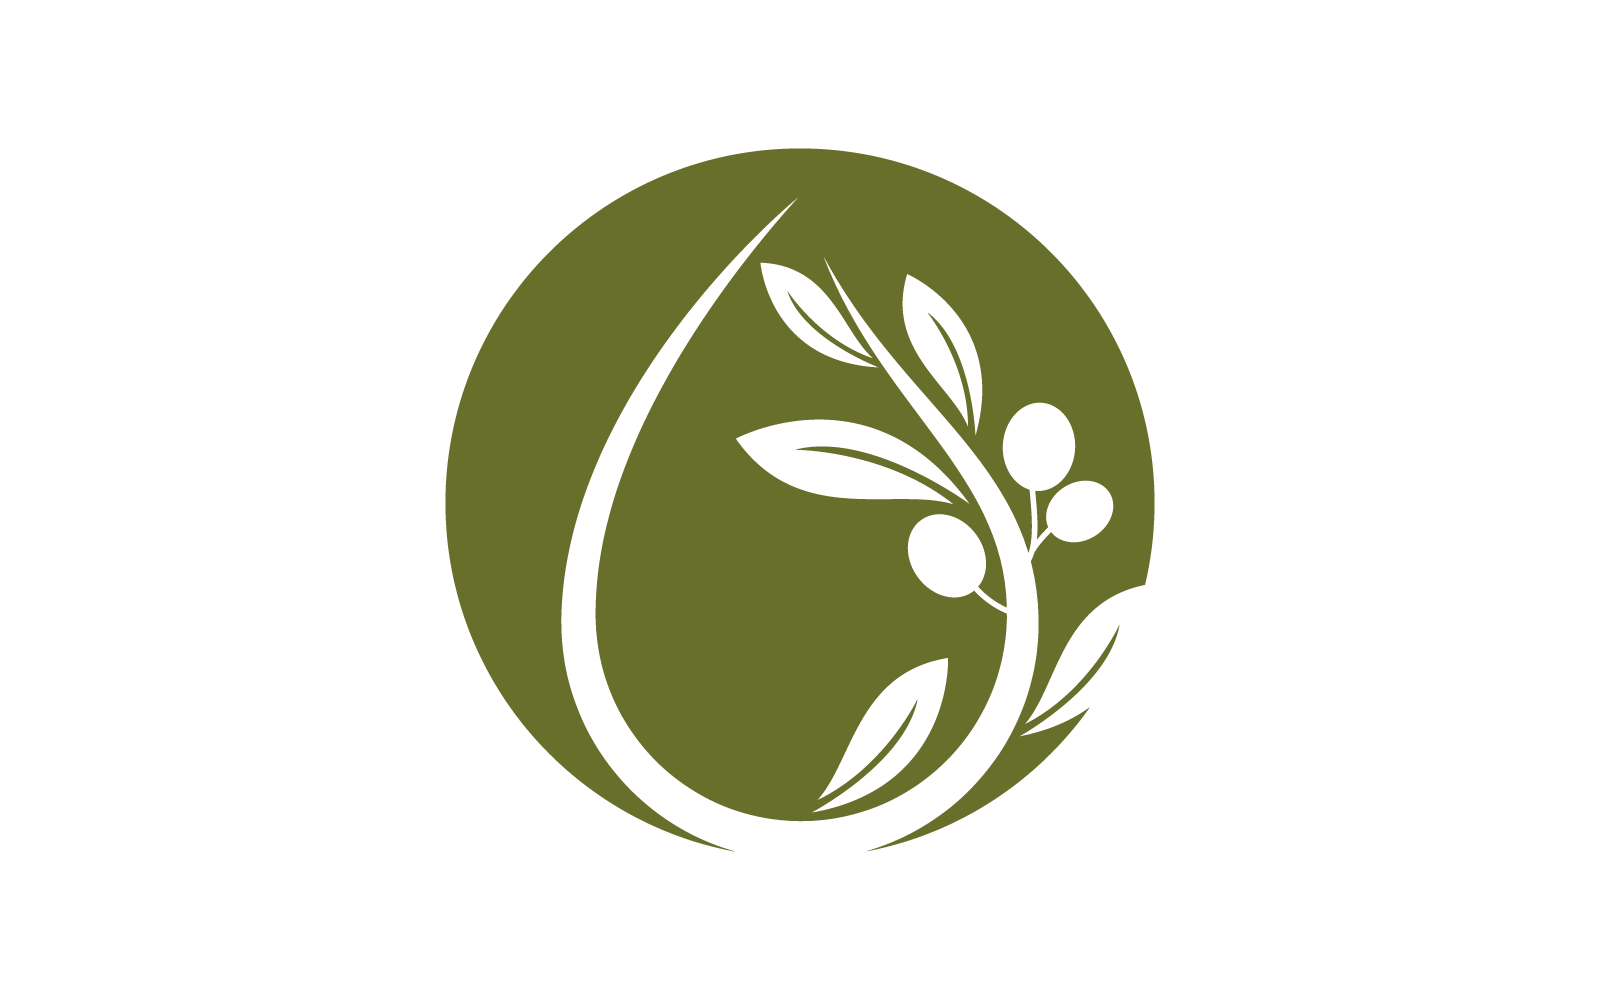 Olive logo vector illustration icon flat design template